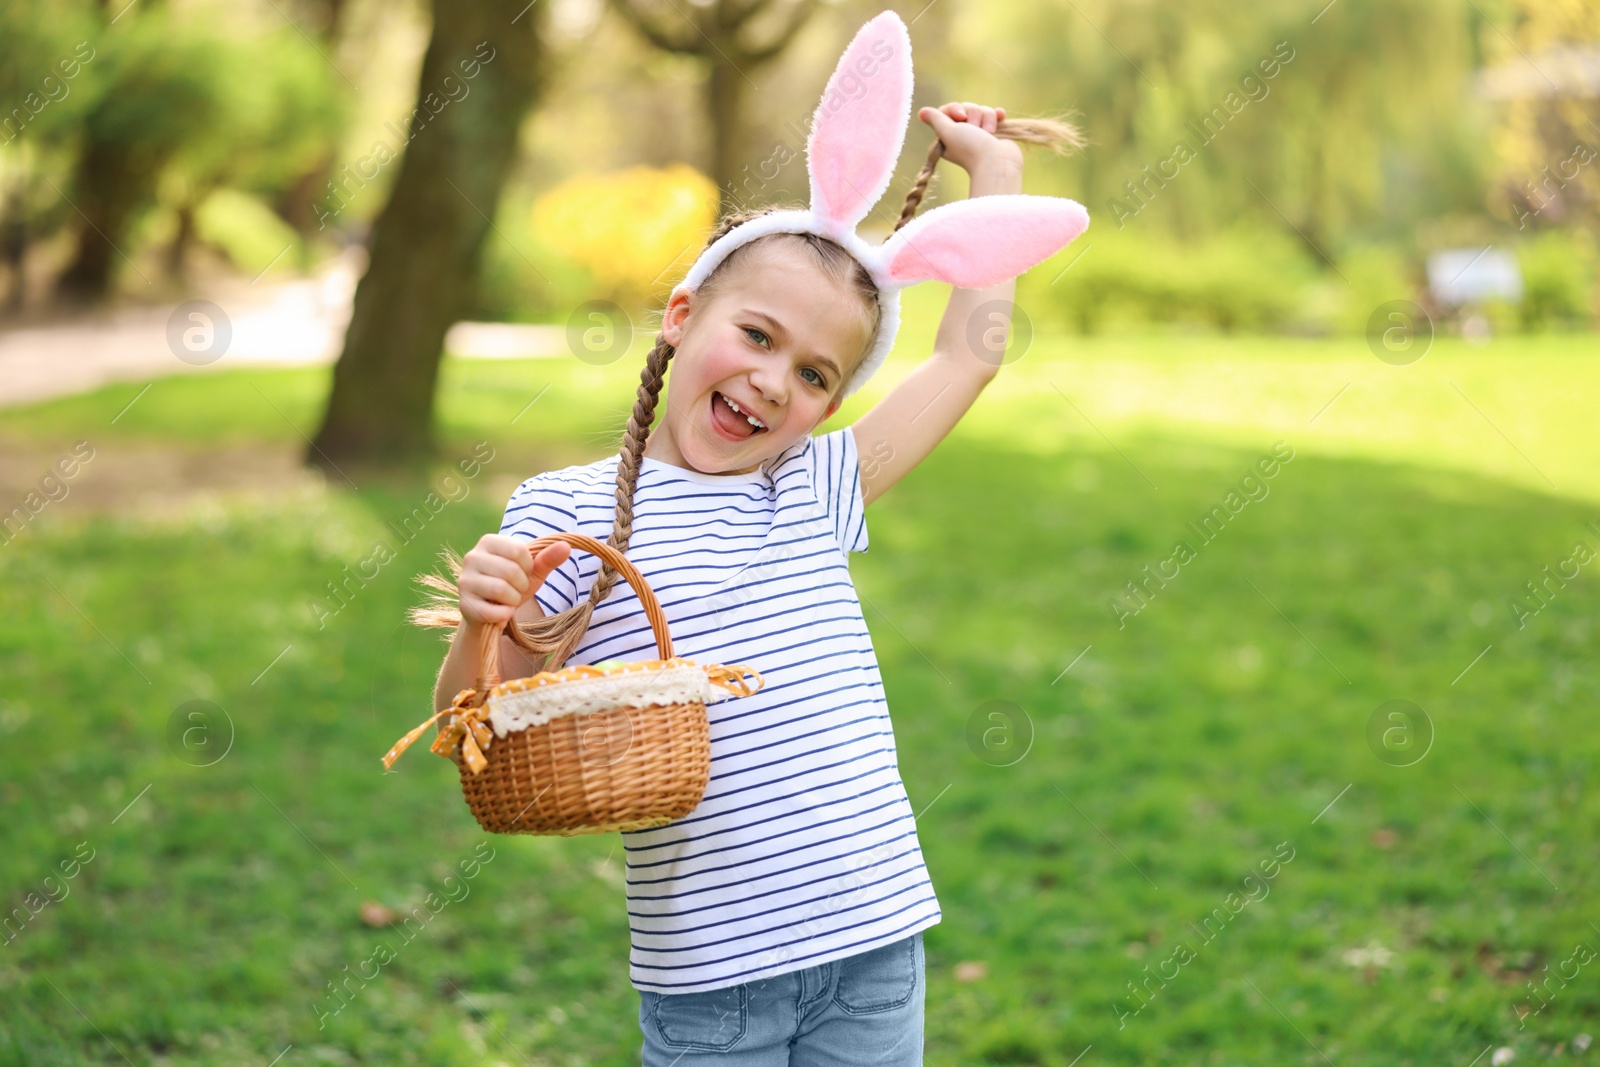 Photo of Easter celebration. Cute little girl in bunny ears holding wicker basket outdoors